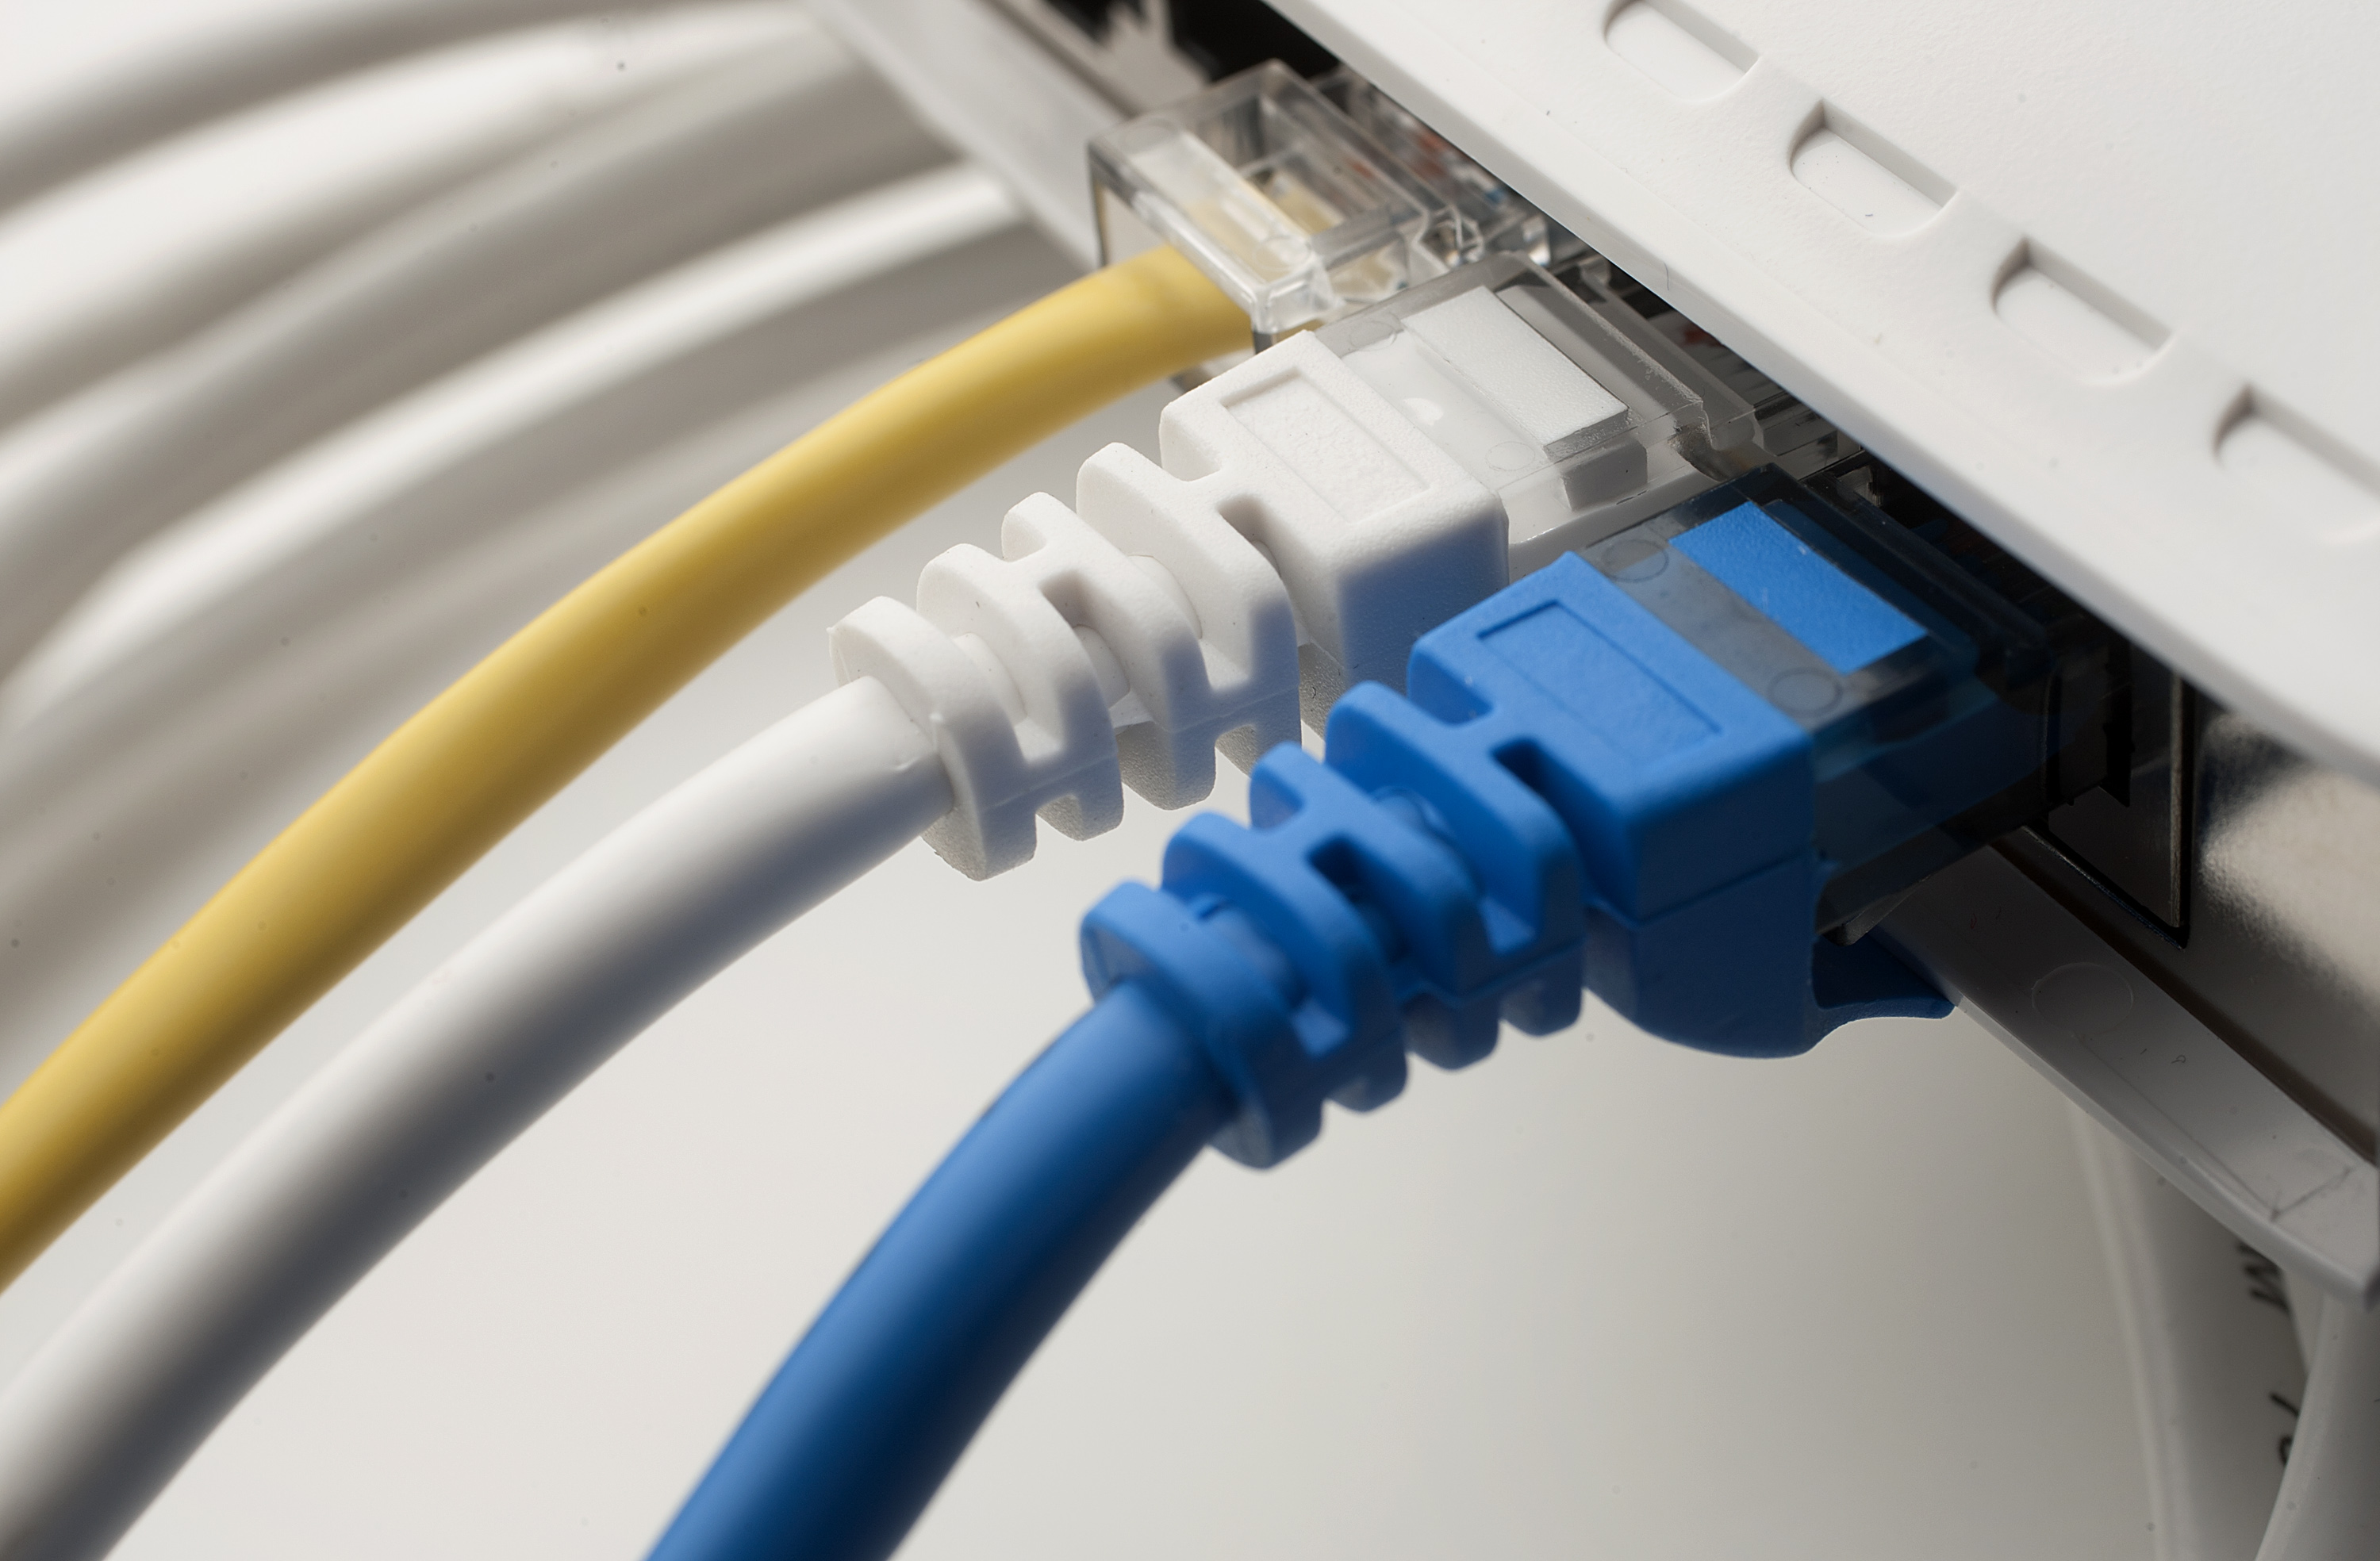 General Images of Ethernet Cords